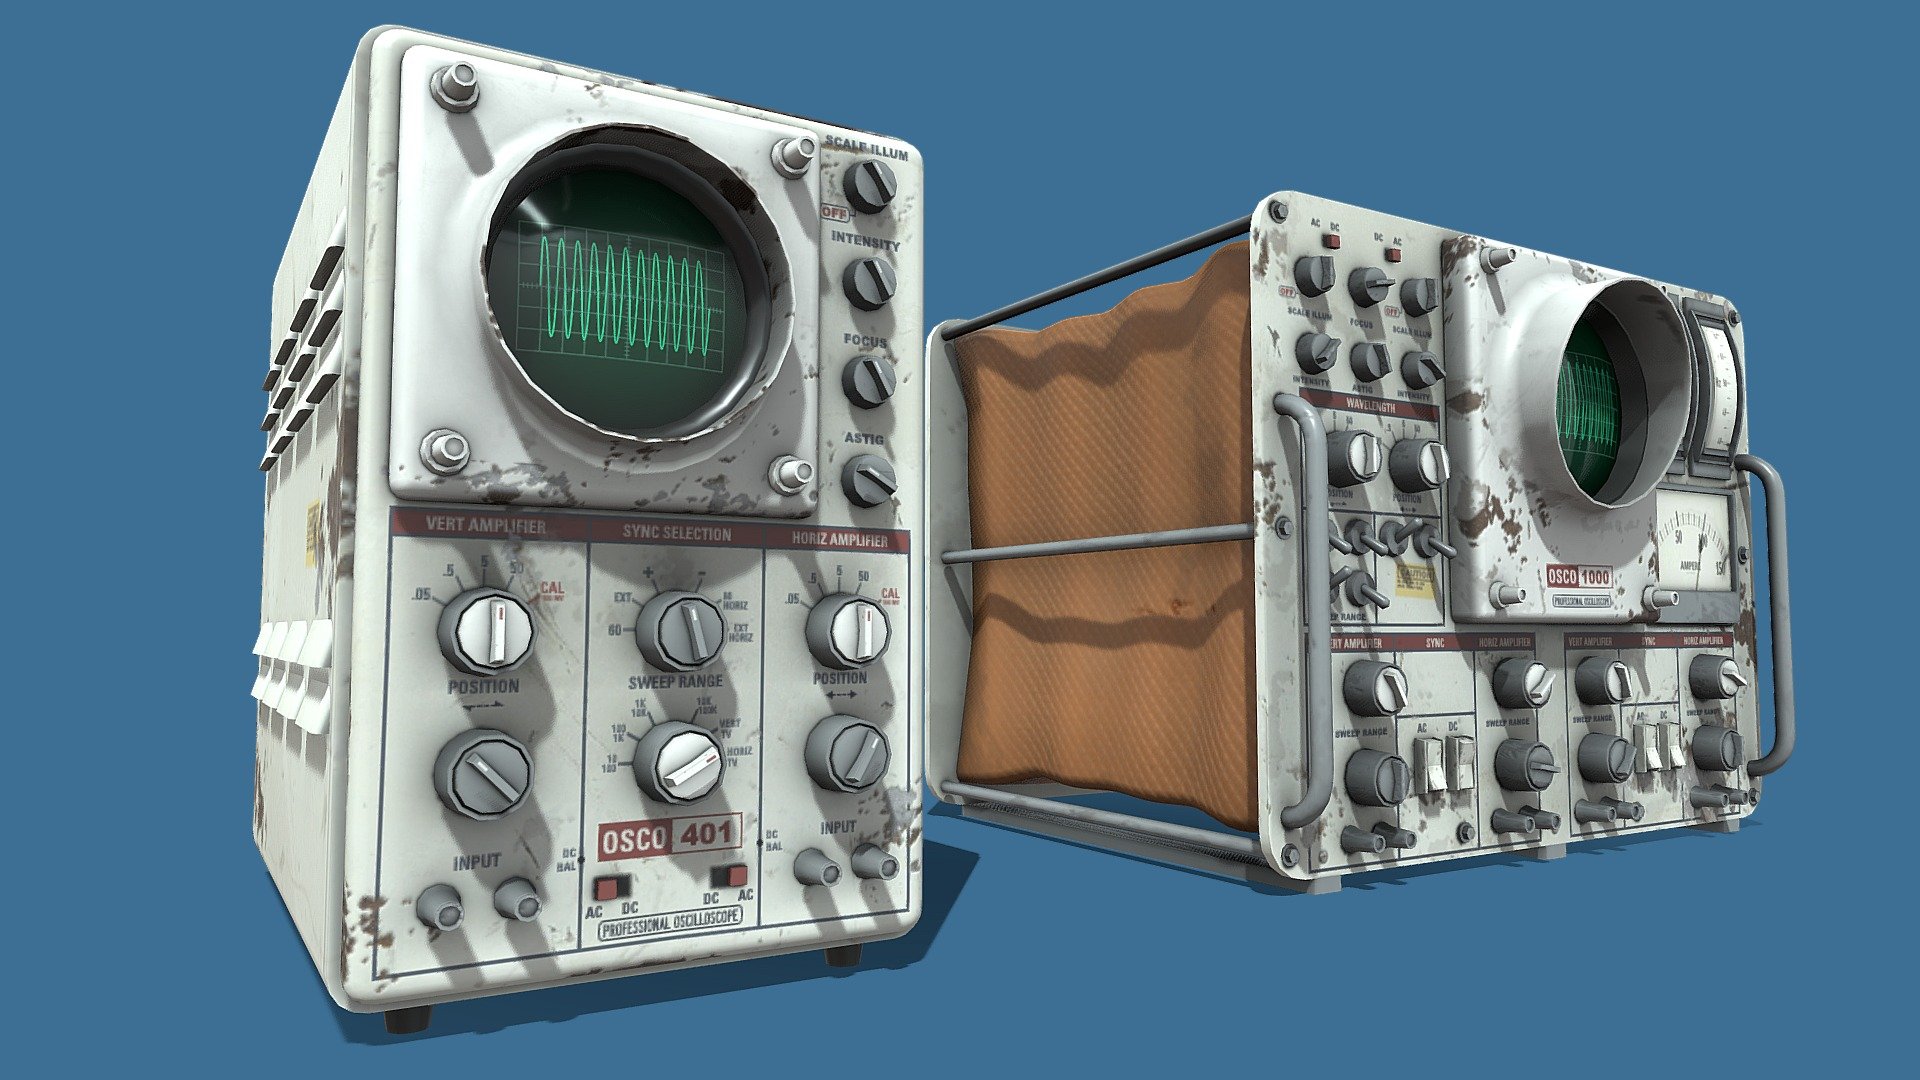 A pair of old 1950's laboratory oscilloscopes - Laboratory Oscilloscopes - Buy Royalty Free 3D model by maxdragonn (@maxdragon) 3d model